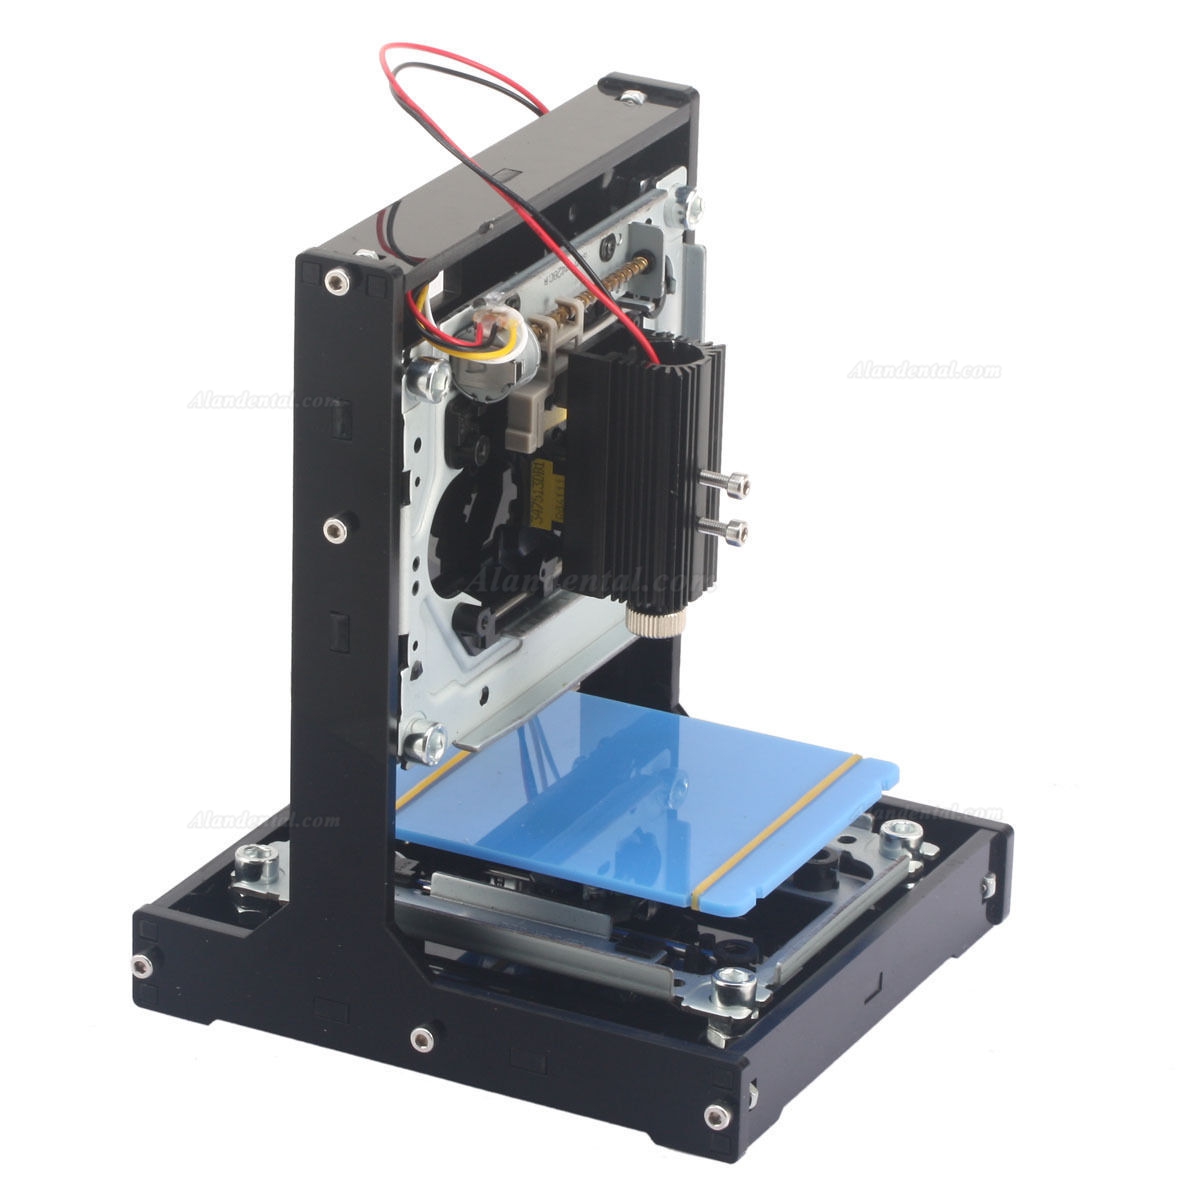 NEJE® DK-5-Pro-5 500mW Laser Printer Engraver Cutter Laser Engraving Machine